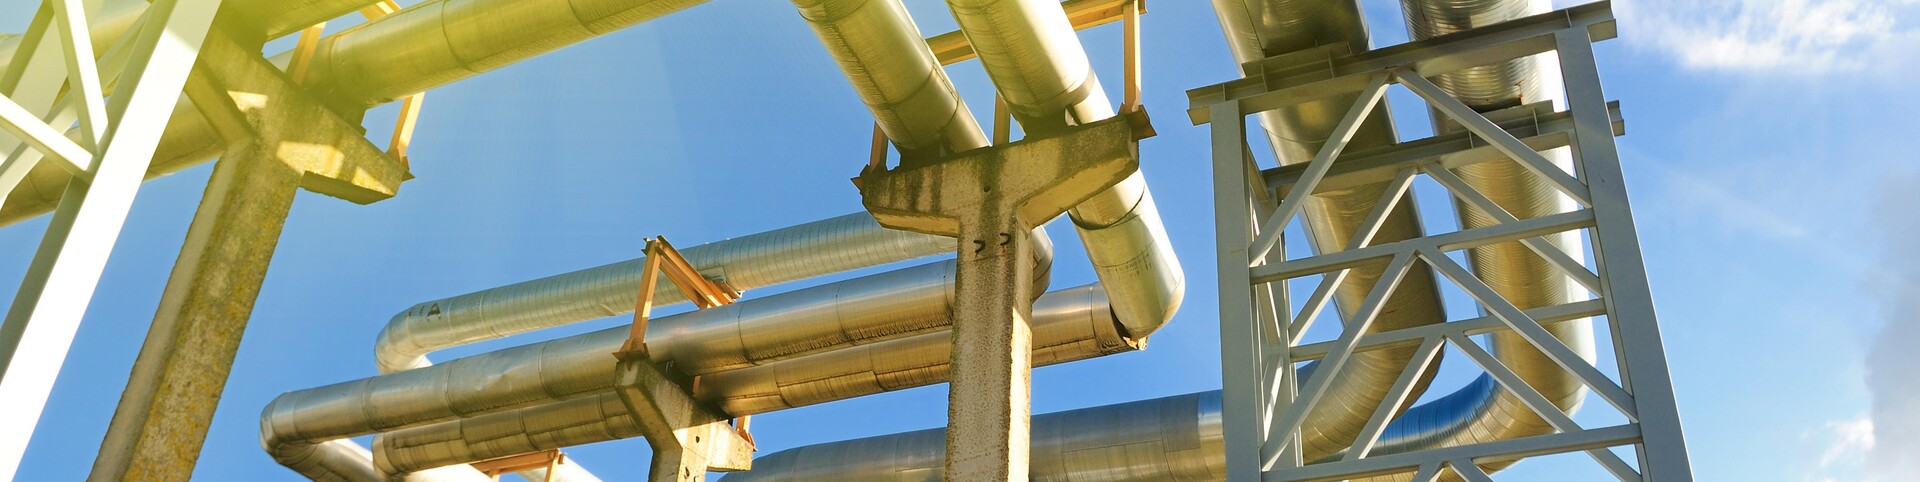 Shutterstock ventilation shafts